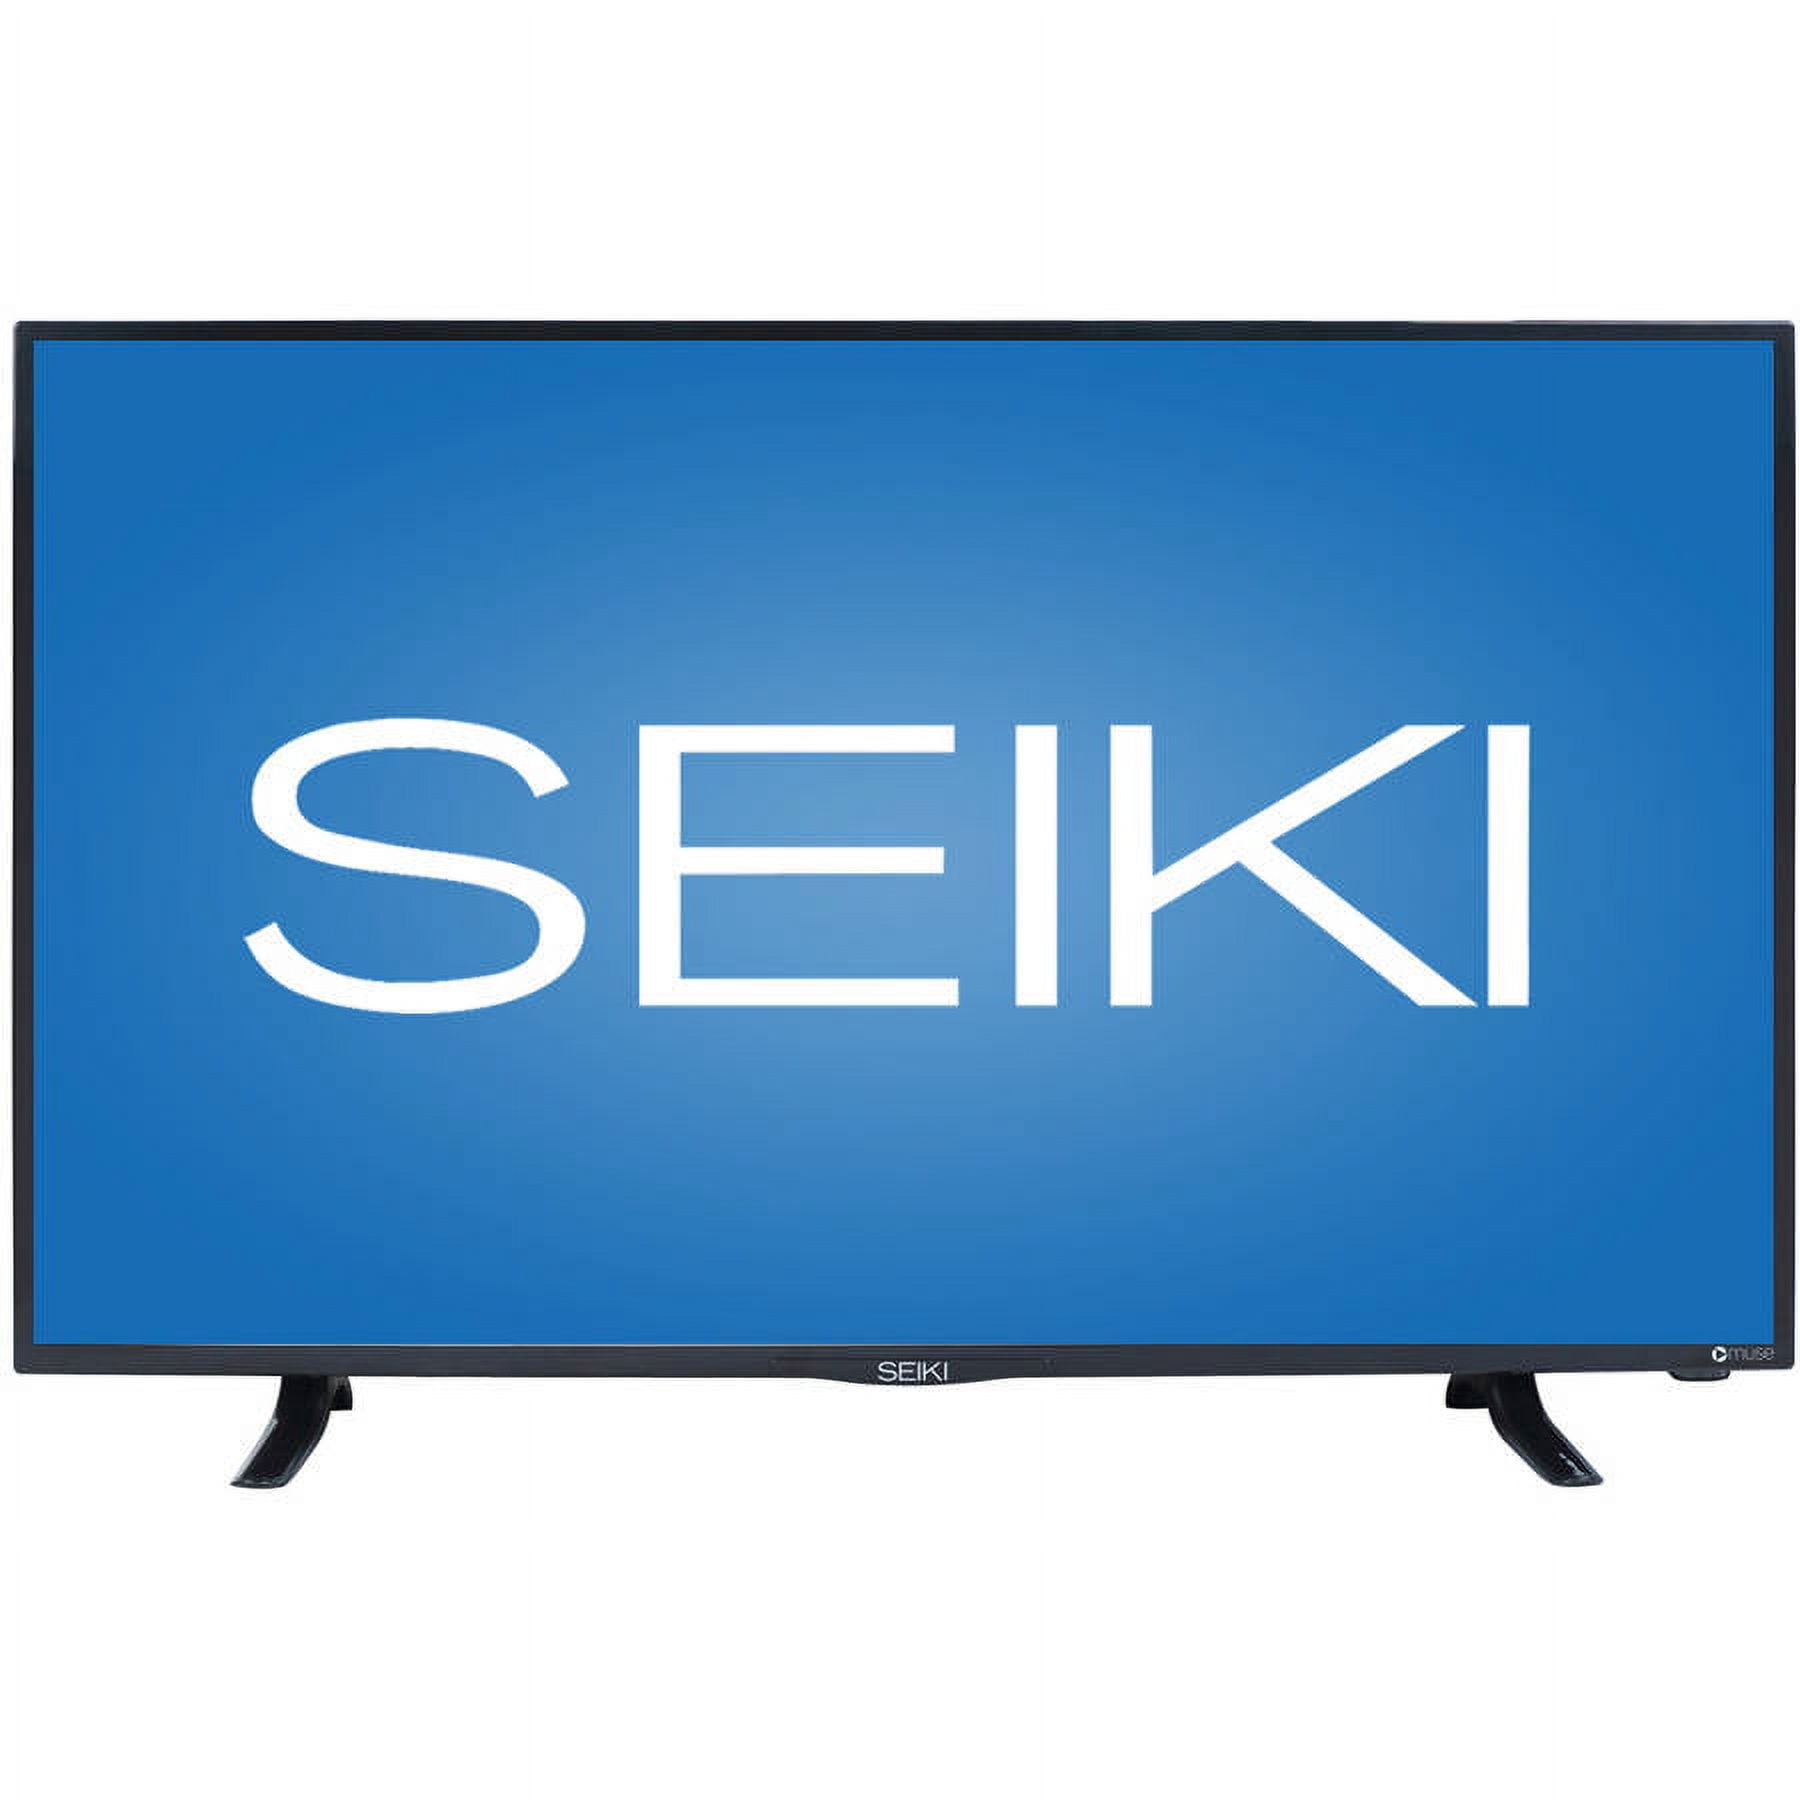 Seiki 42 Class - Full HD, Smart, LED TV - 1080p, 60Hz (SE42FYP1T)